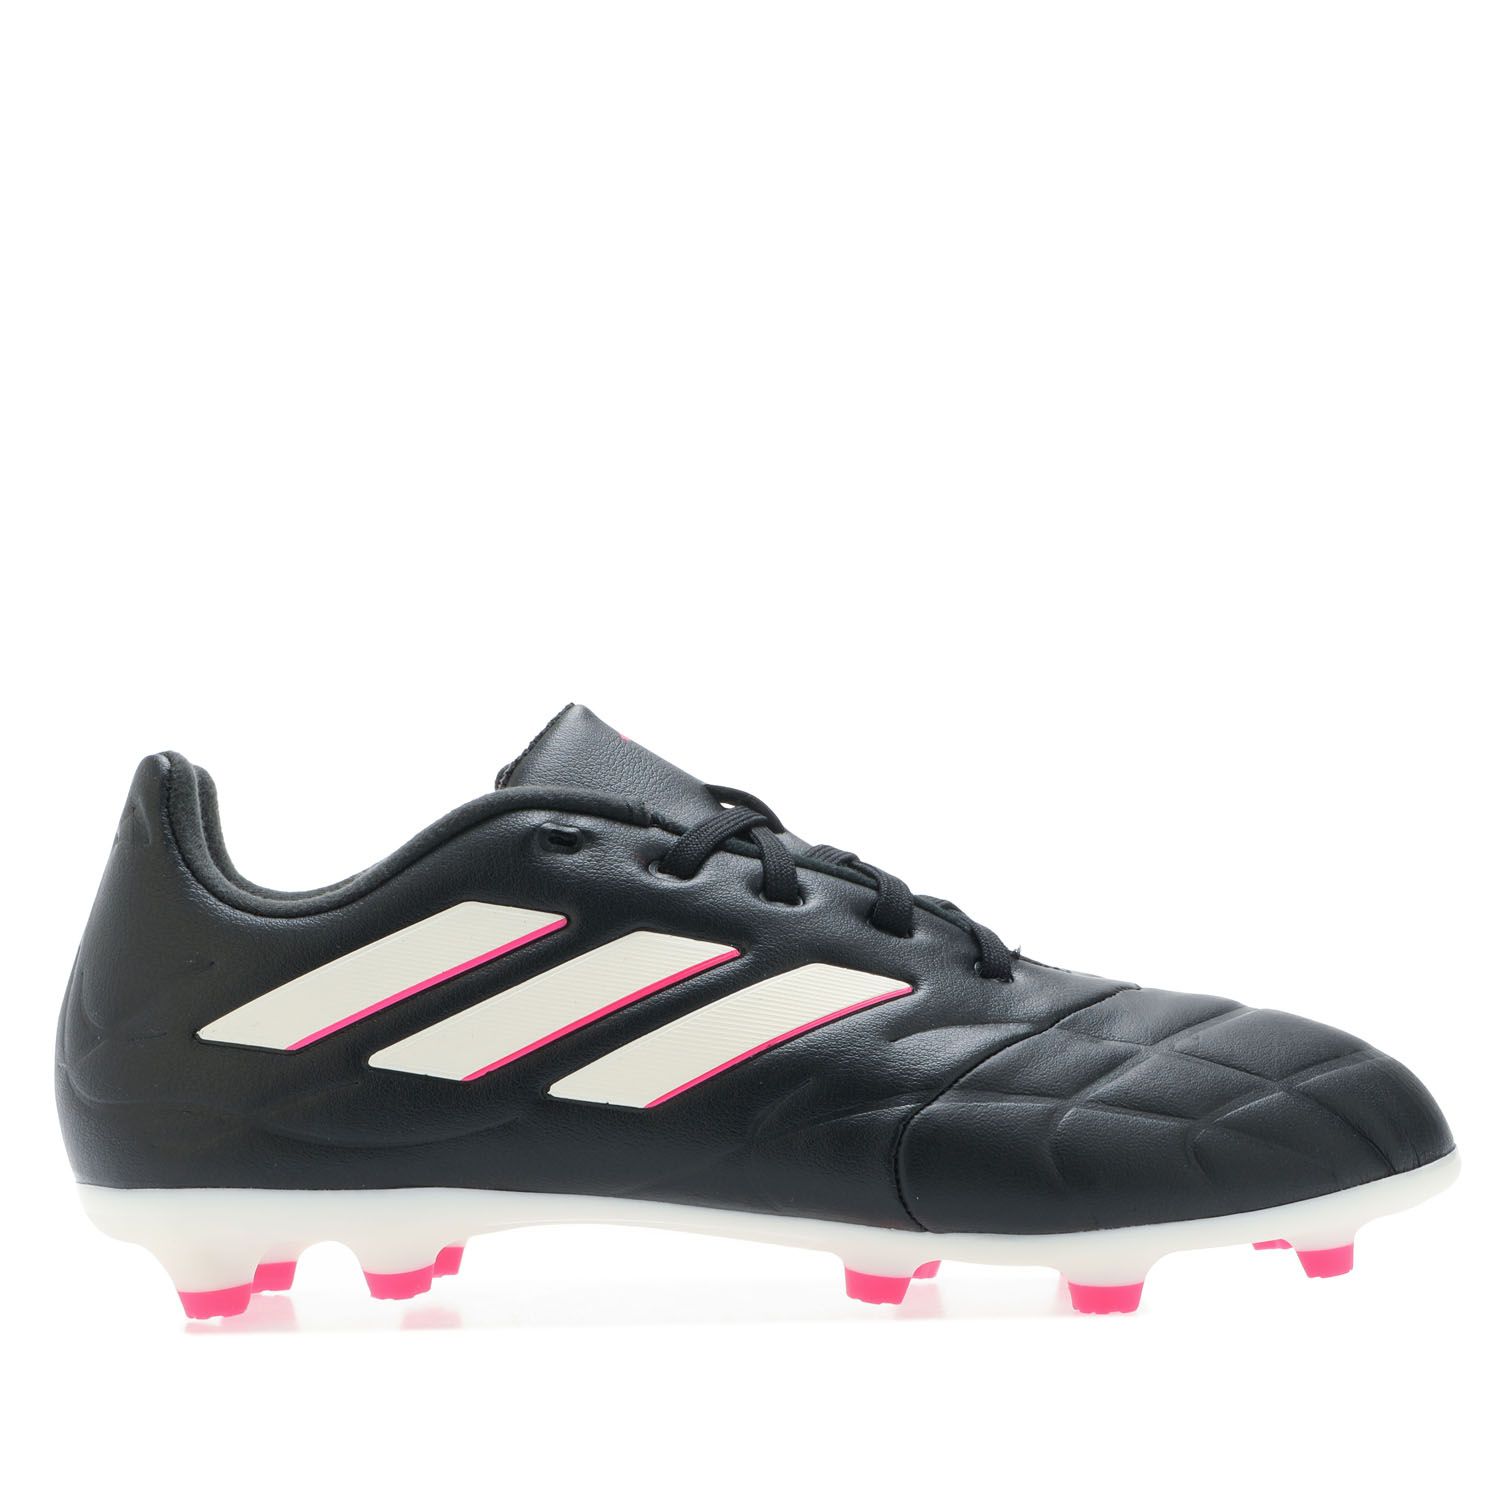 Copa Pure.3 FG Football Boots